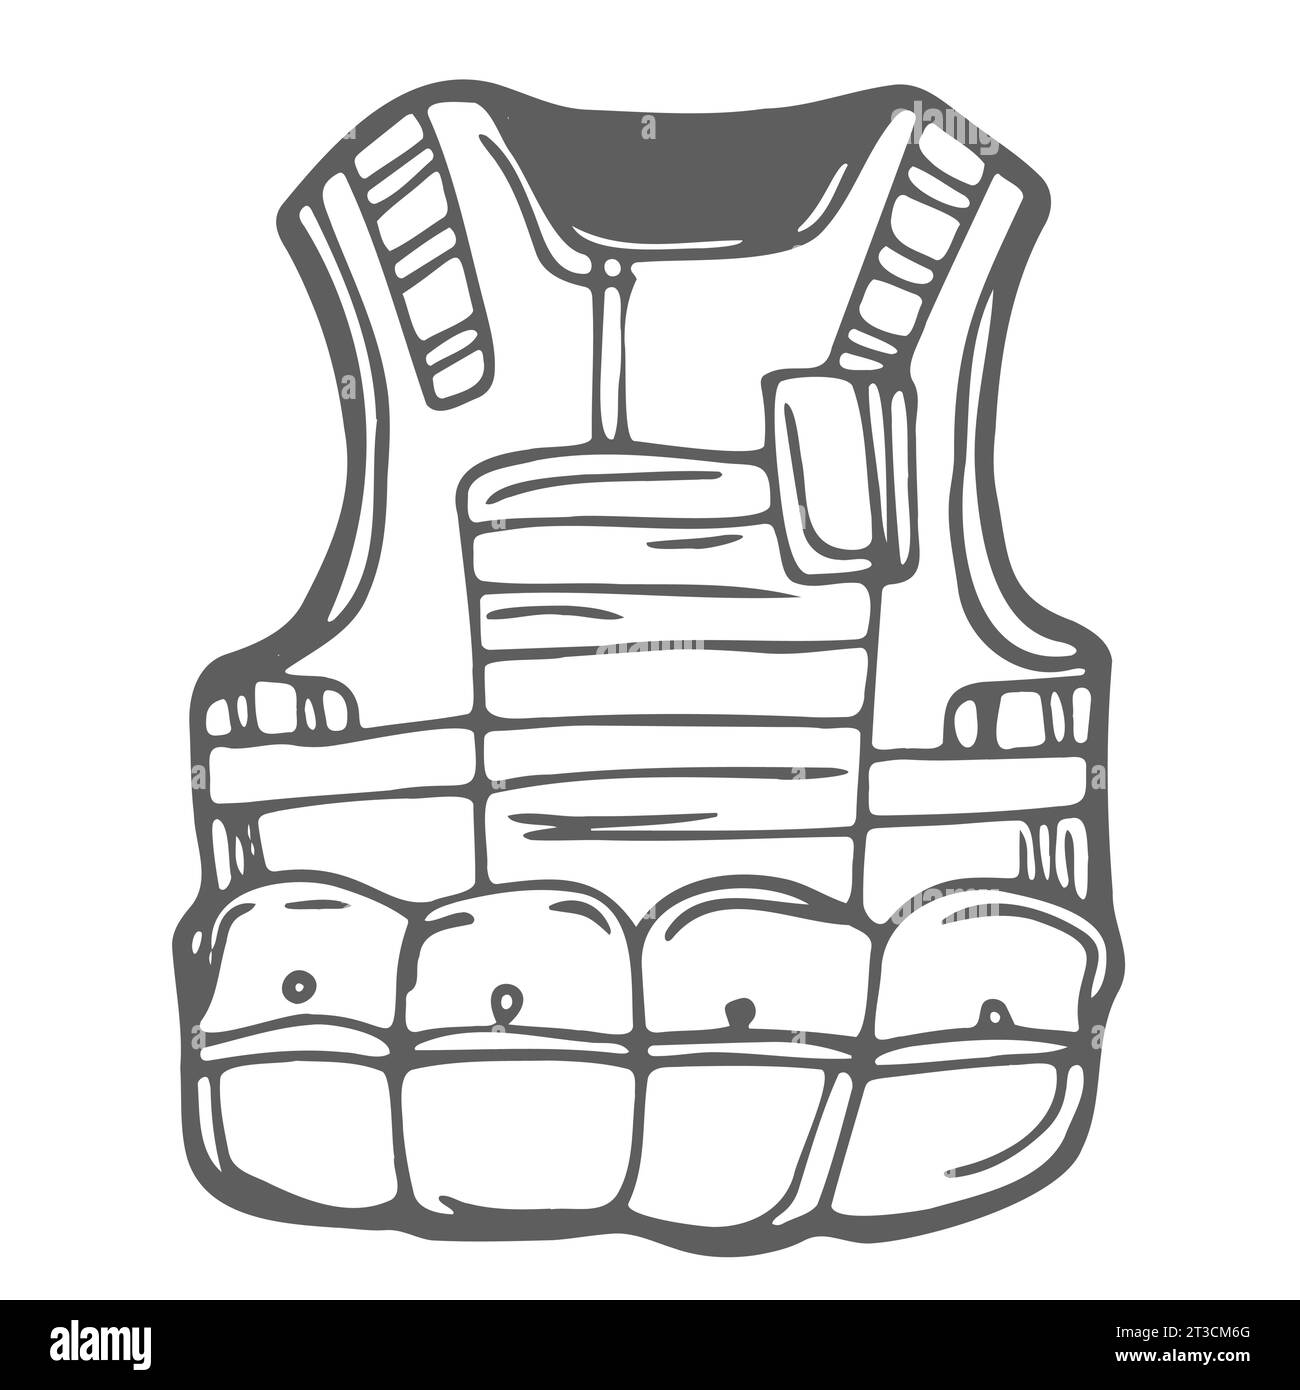 Soldier Vest Icon Silhouette Illustration. Body Armor Vector Graphic ...